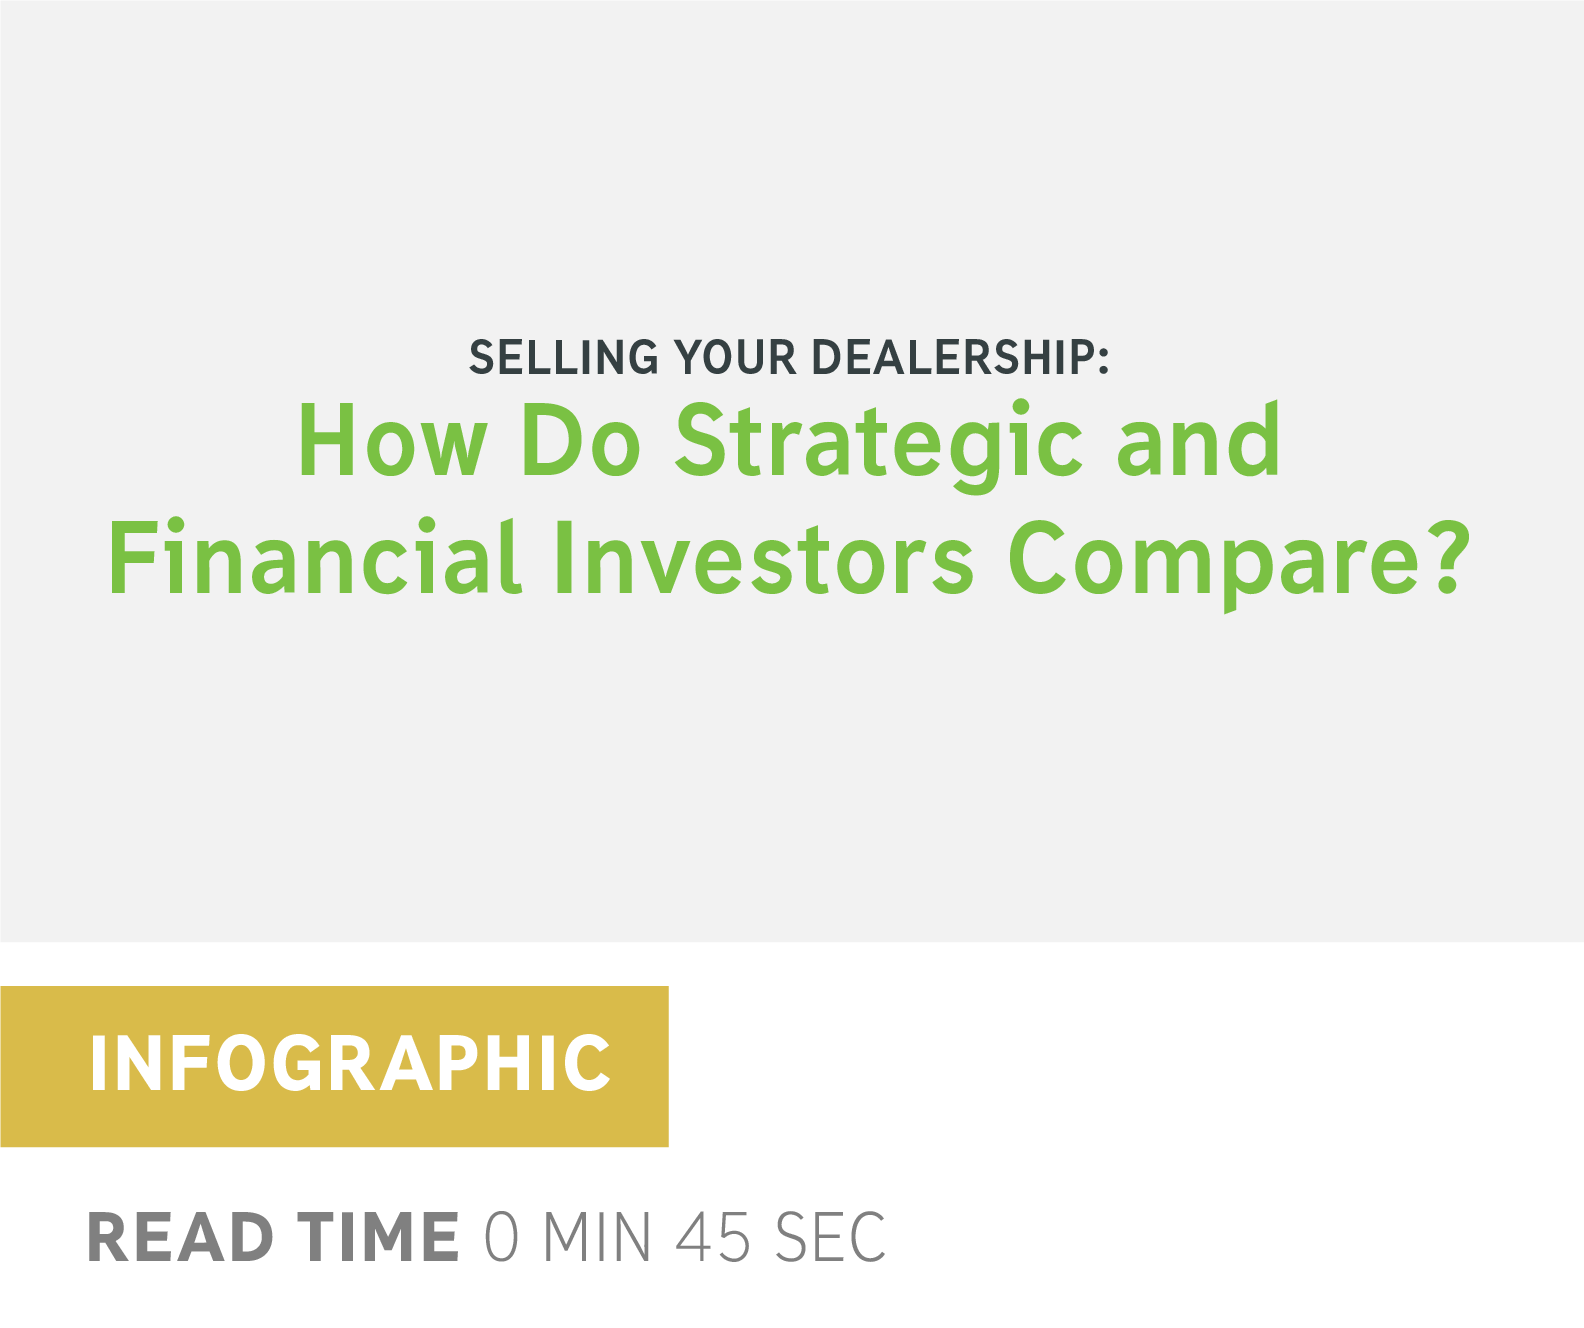 How Do Strategic and Financial Investors Compare?